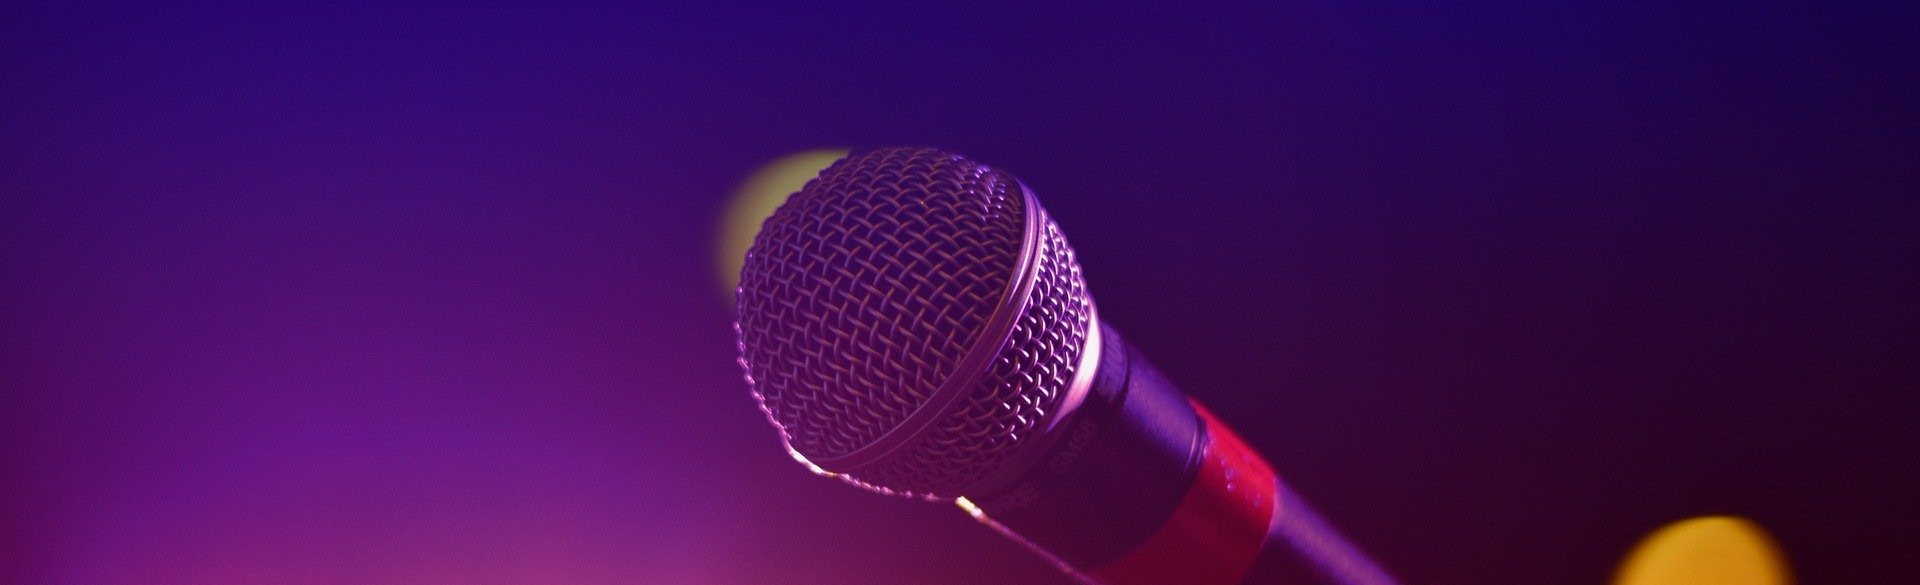 Mikrofon auf Bühne